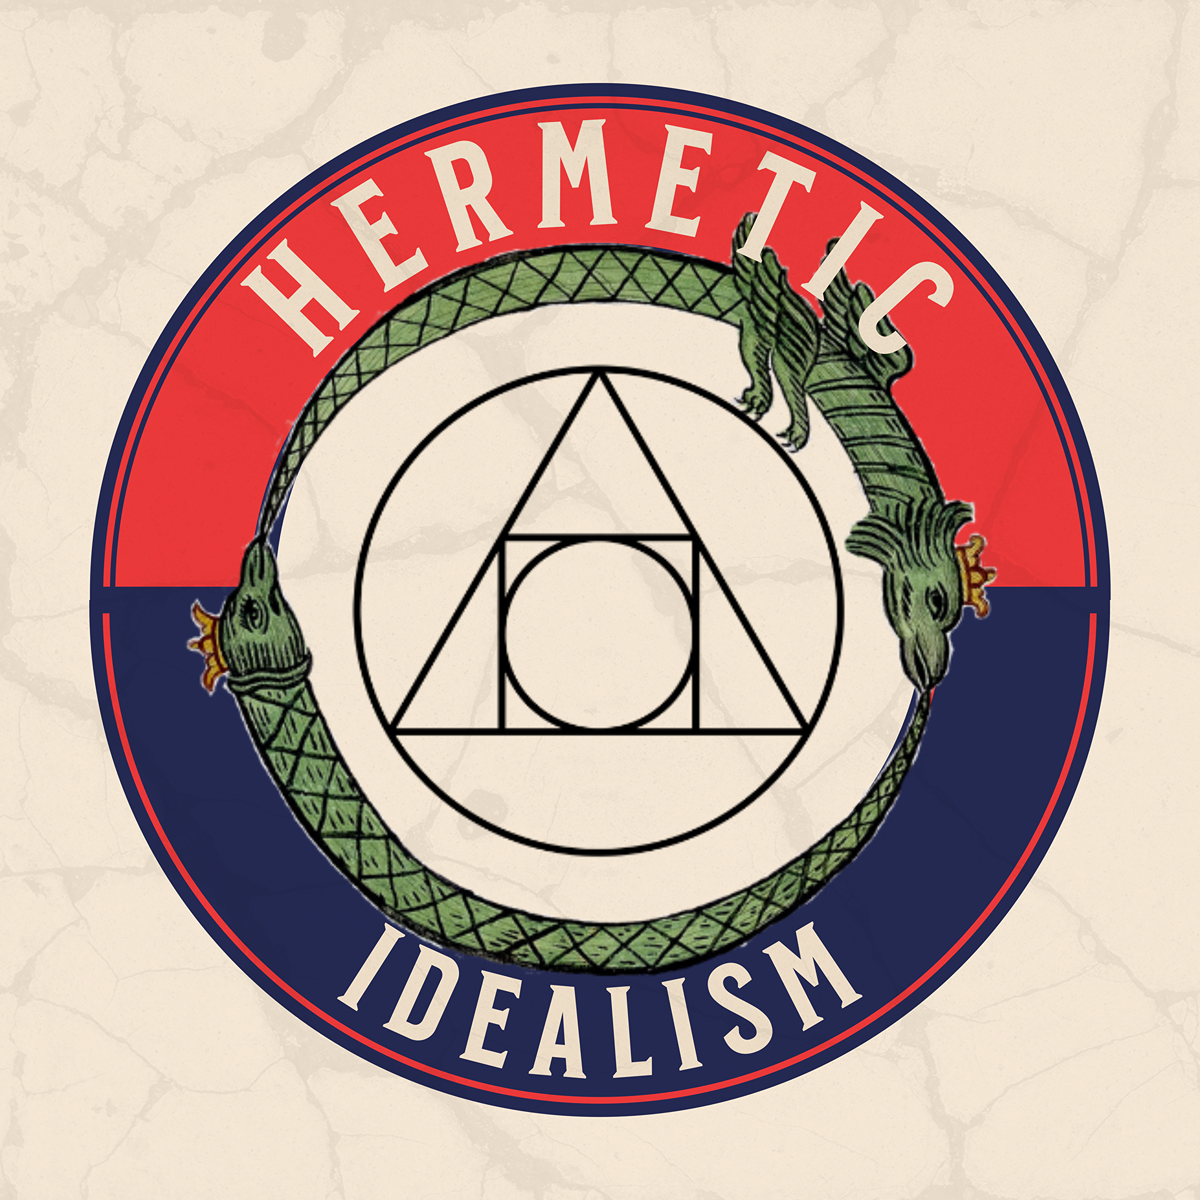 Hermetic Idealism